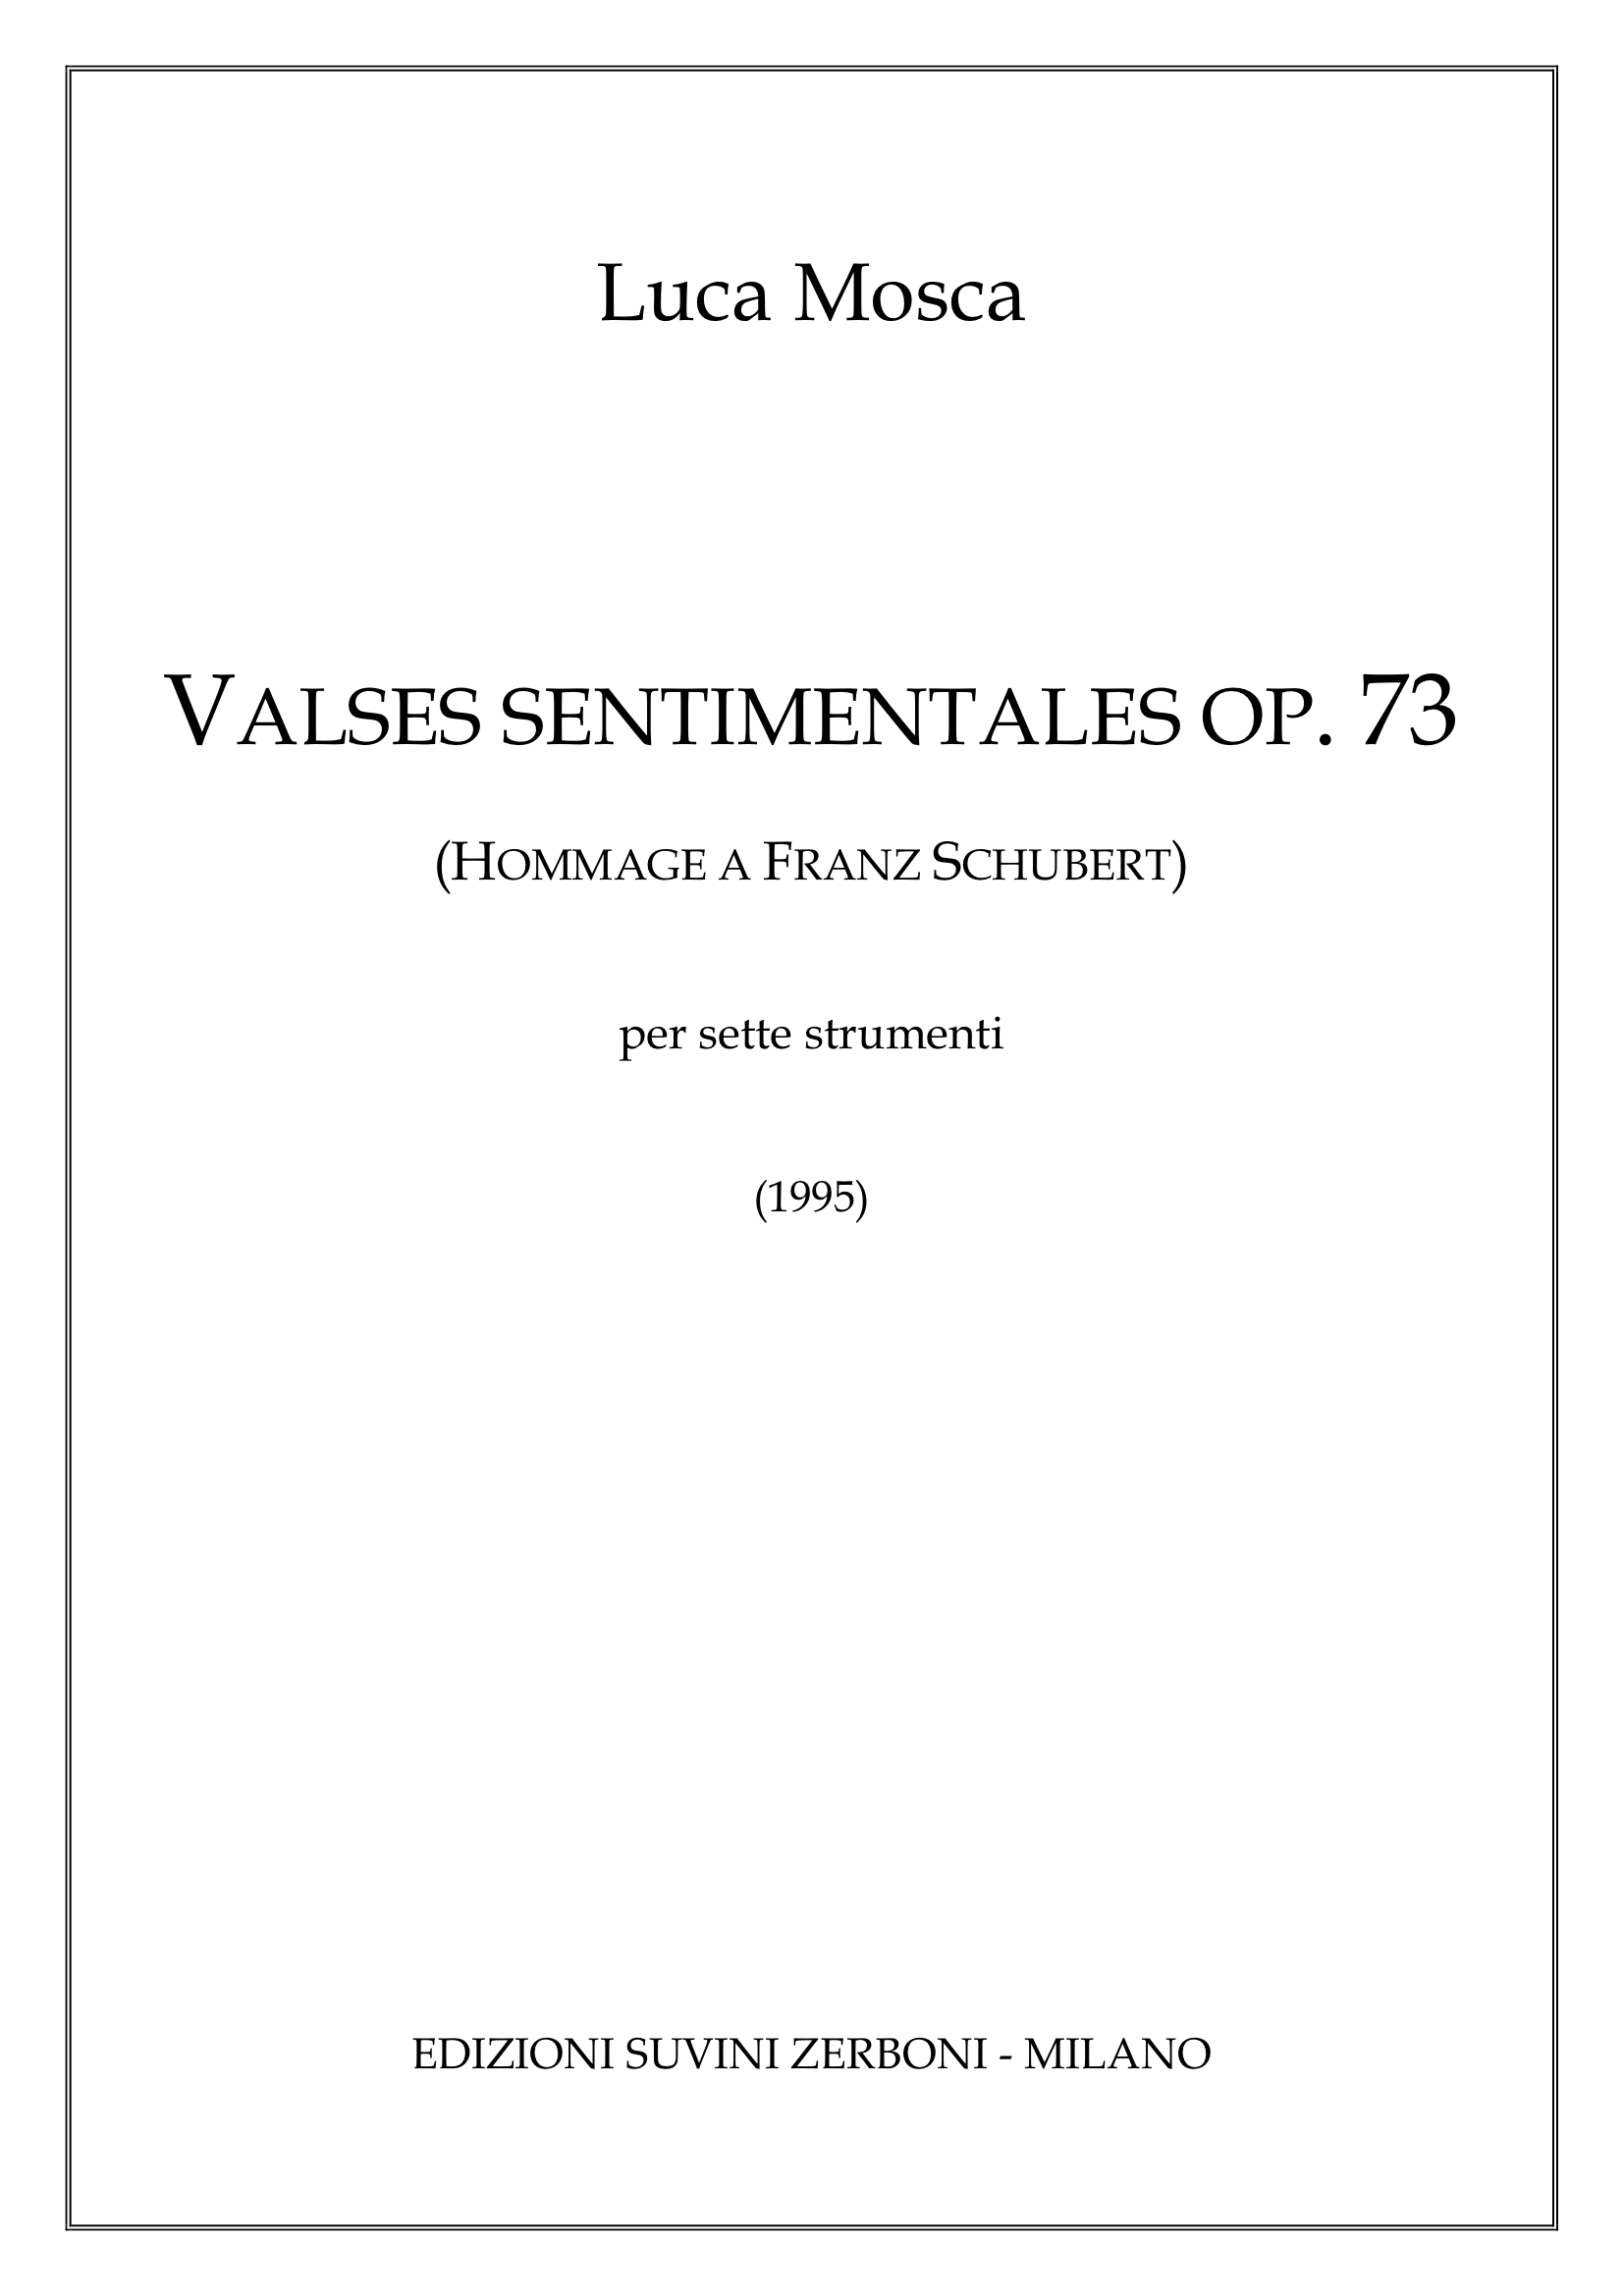 Valses Sentimentales_Mosca 1 1041